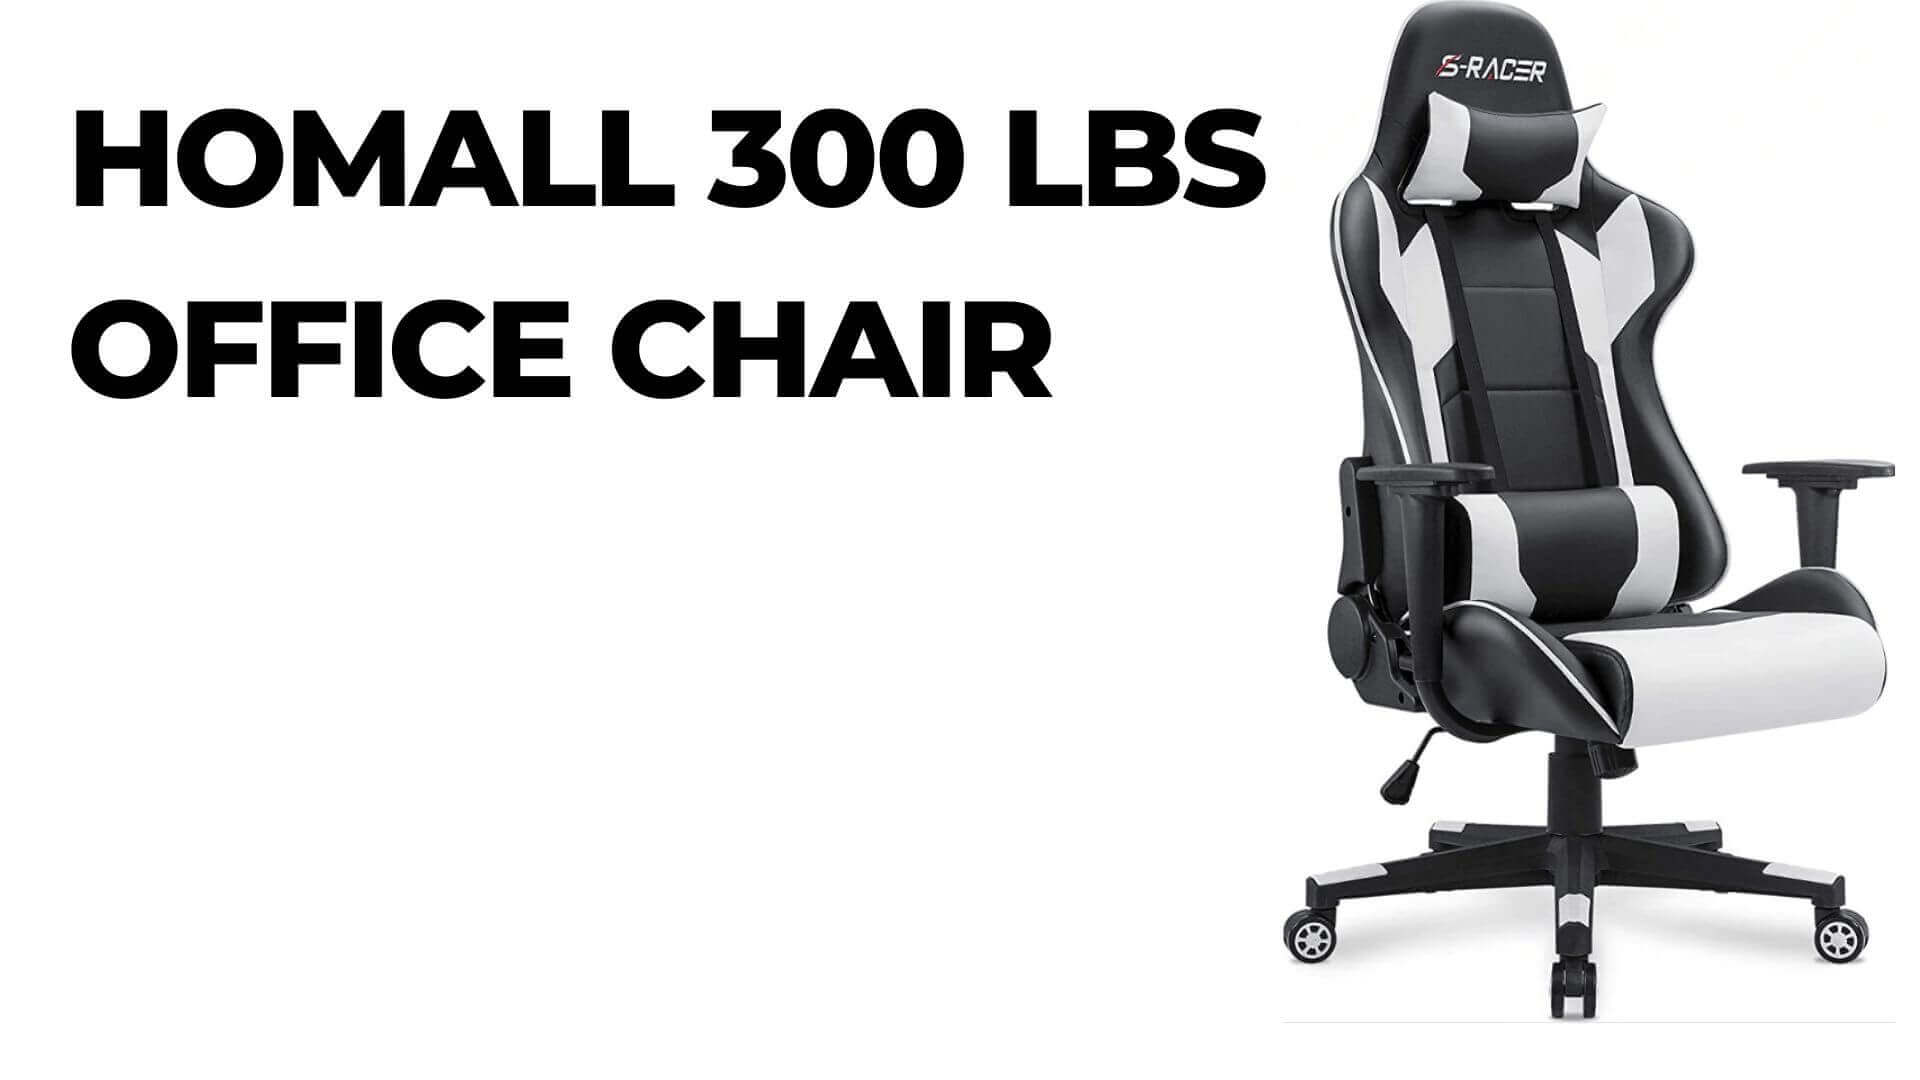 Homall 300 lbs Office Chair